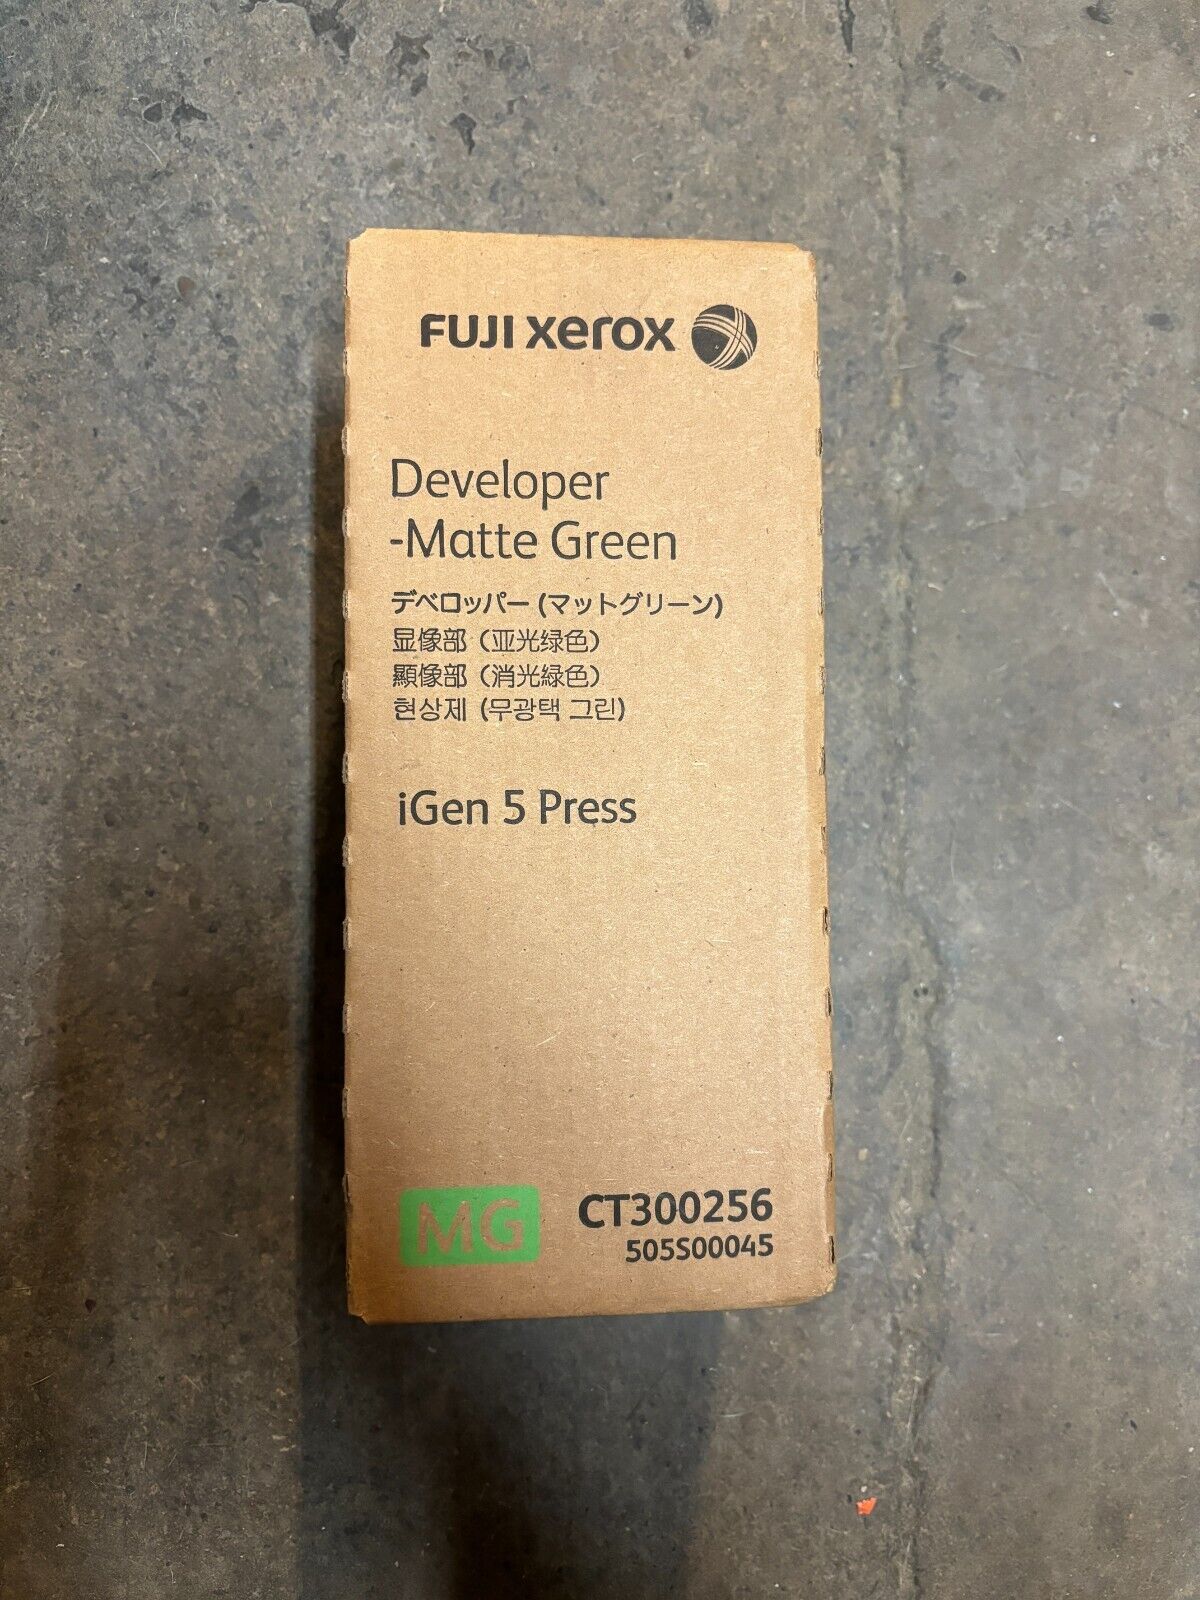 Fuji Xerox Developer Matte Green iGen 5 Press Toner NEW IN BOX MG  SEALED